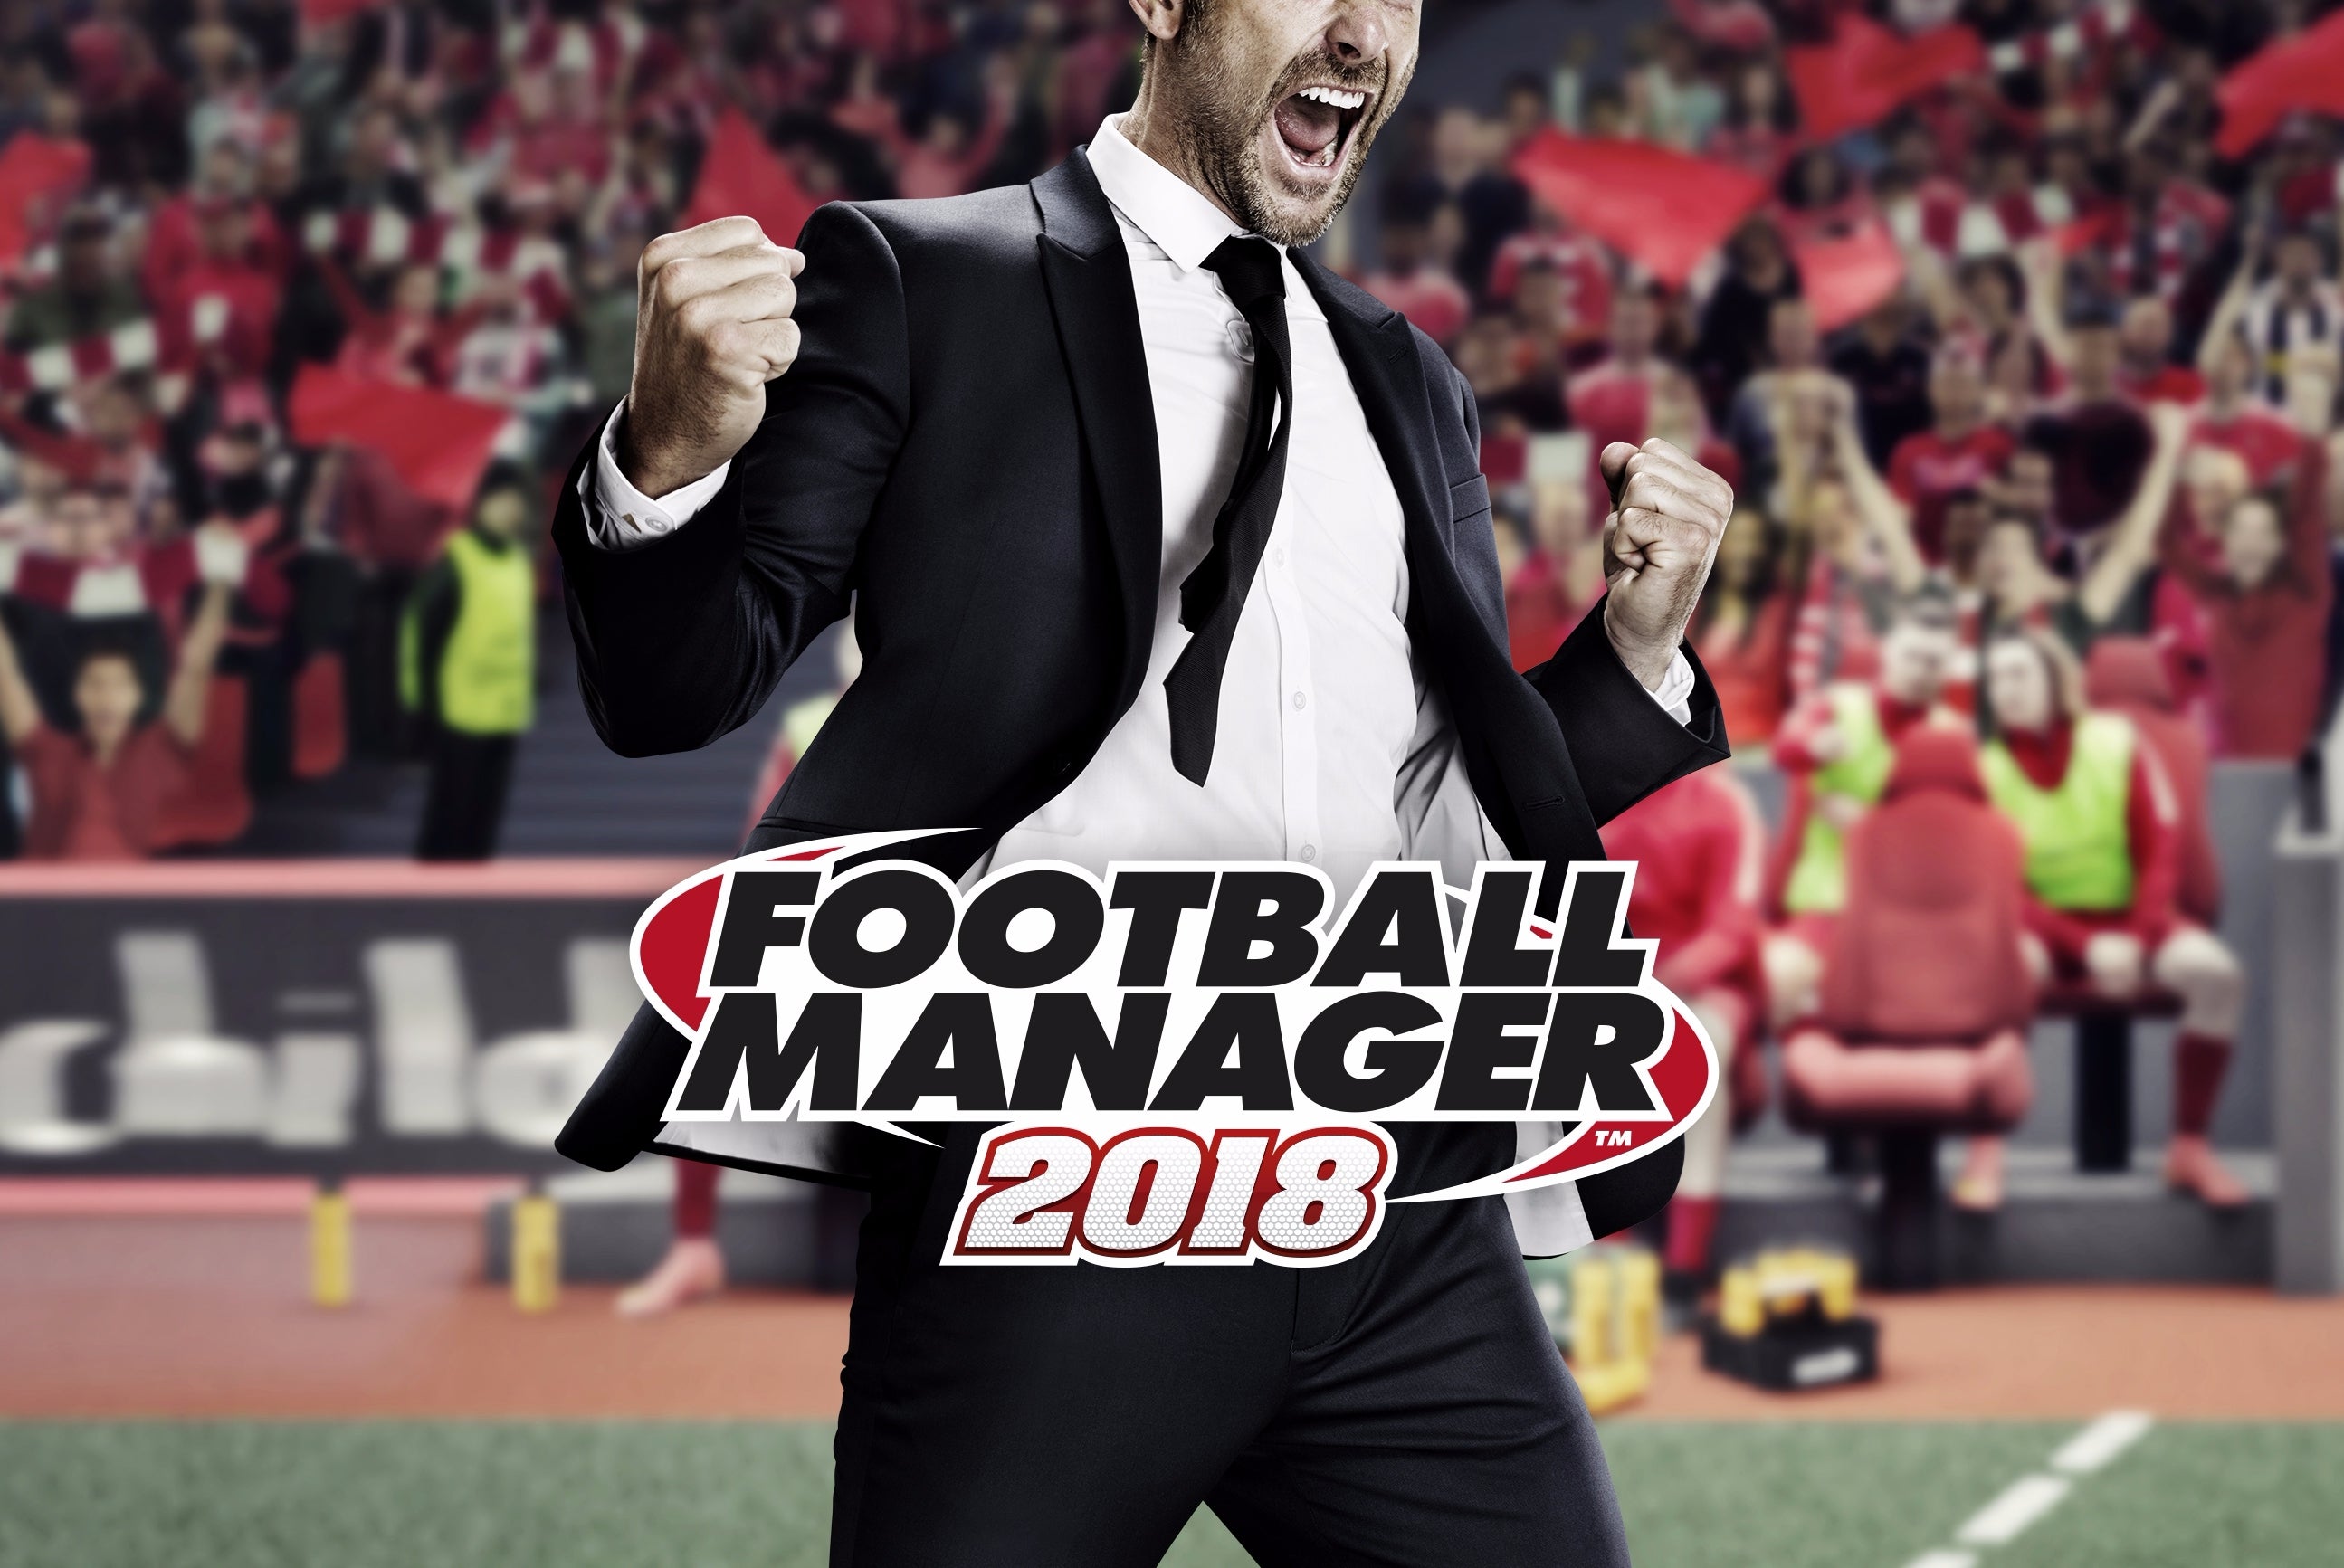 Obrazki dla Football Manager 2018 - premiera 10 listopada